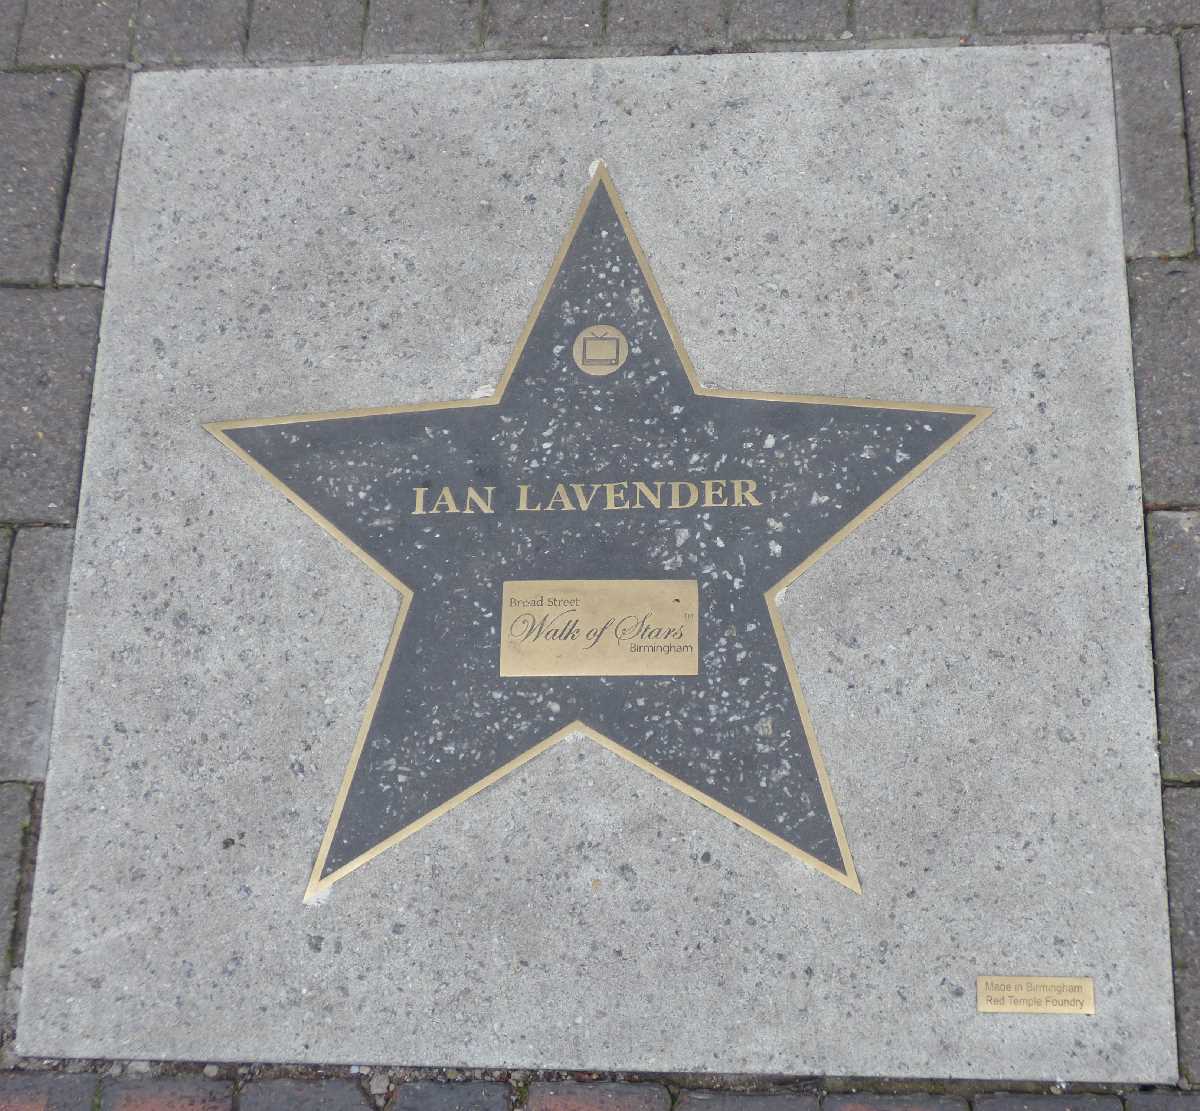 Ian Lavender